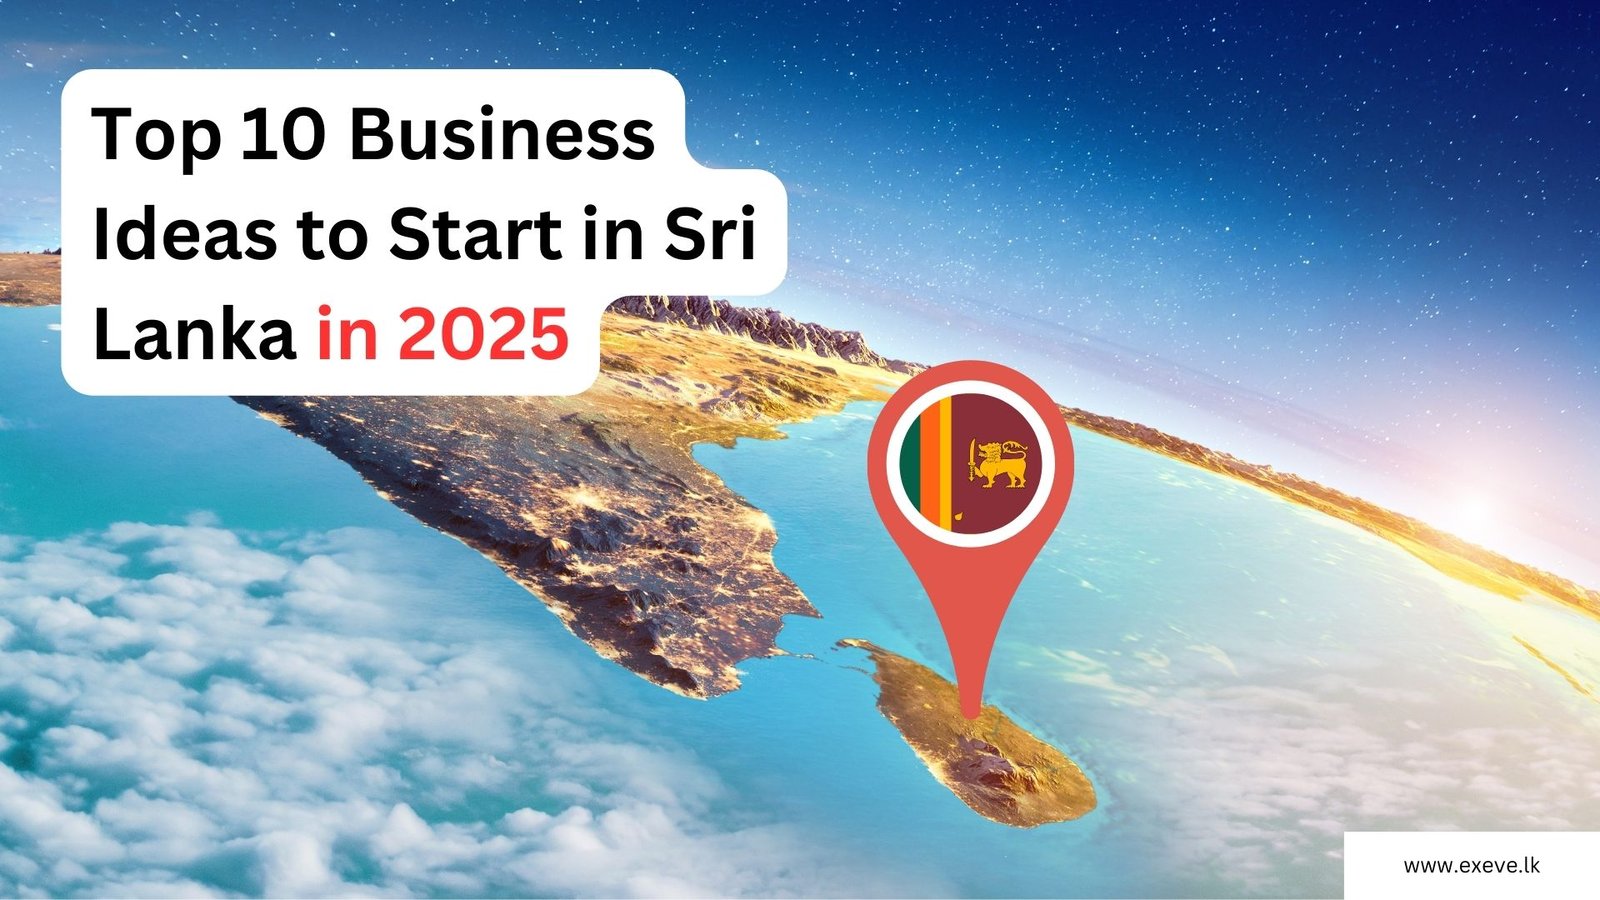 Top 10 Business Ideas to Start in Sri Lanka in 2025